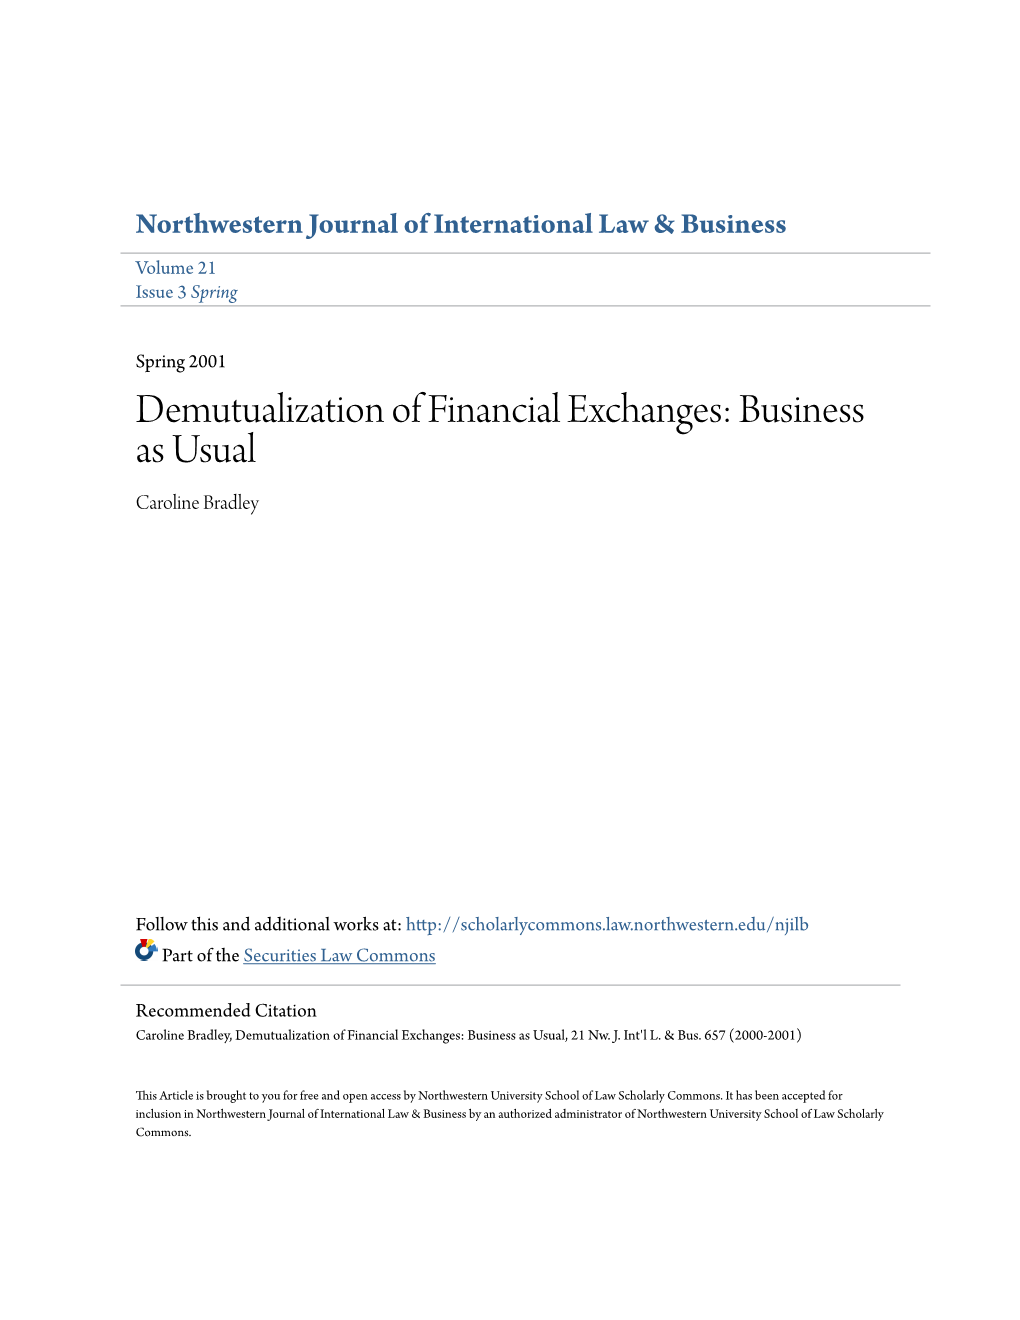 Demutualization of Financial Exchanges: Business As Usual Caroline Bradley